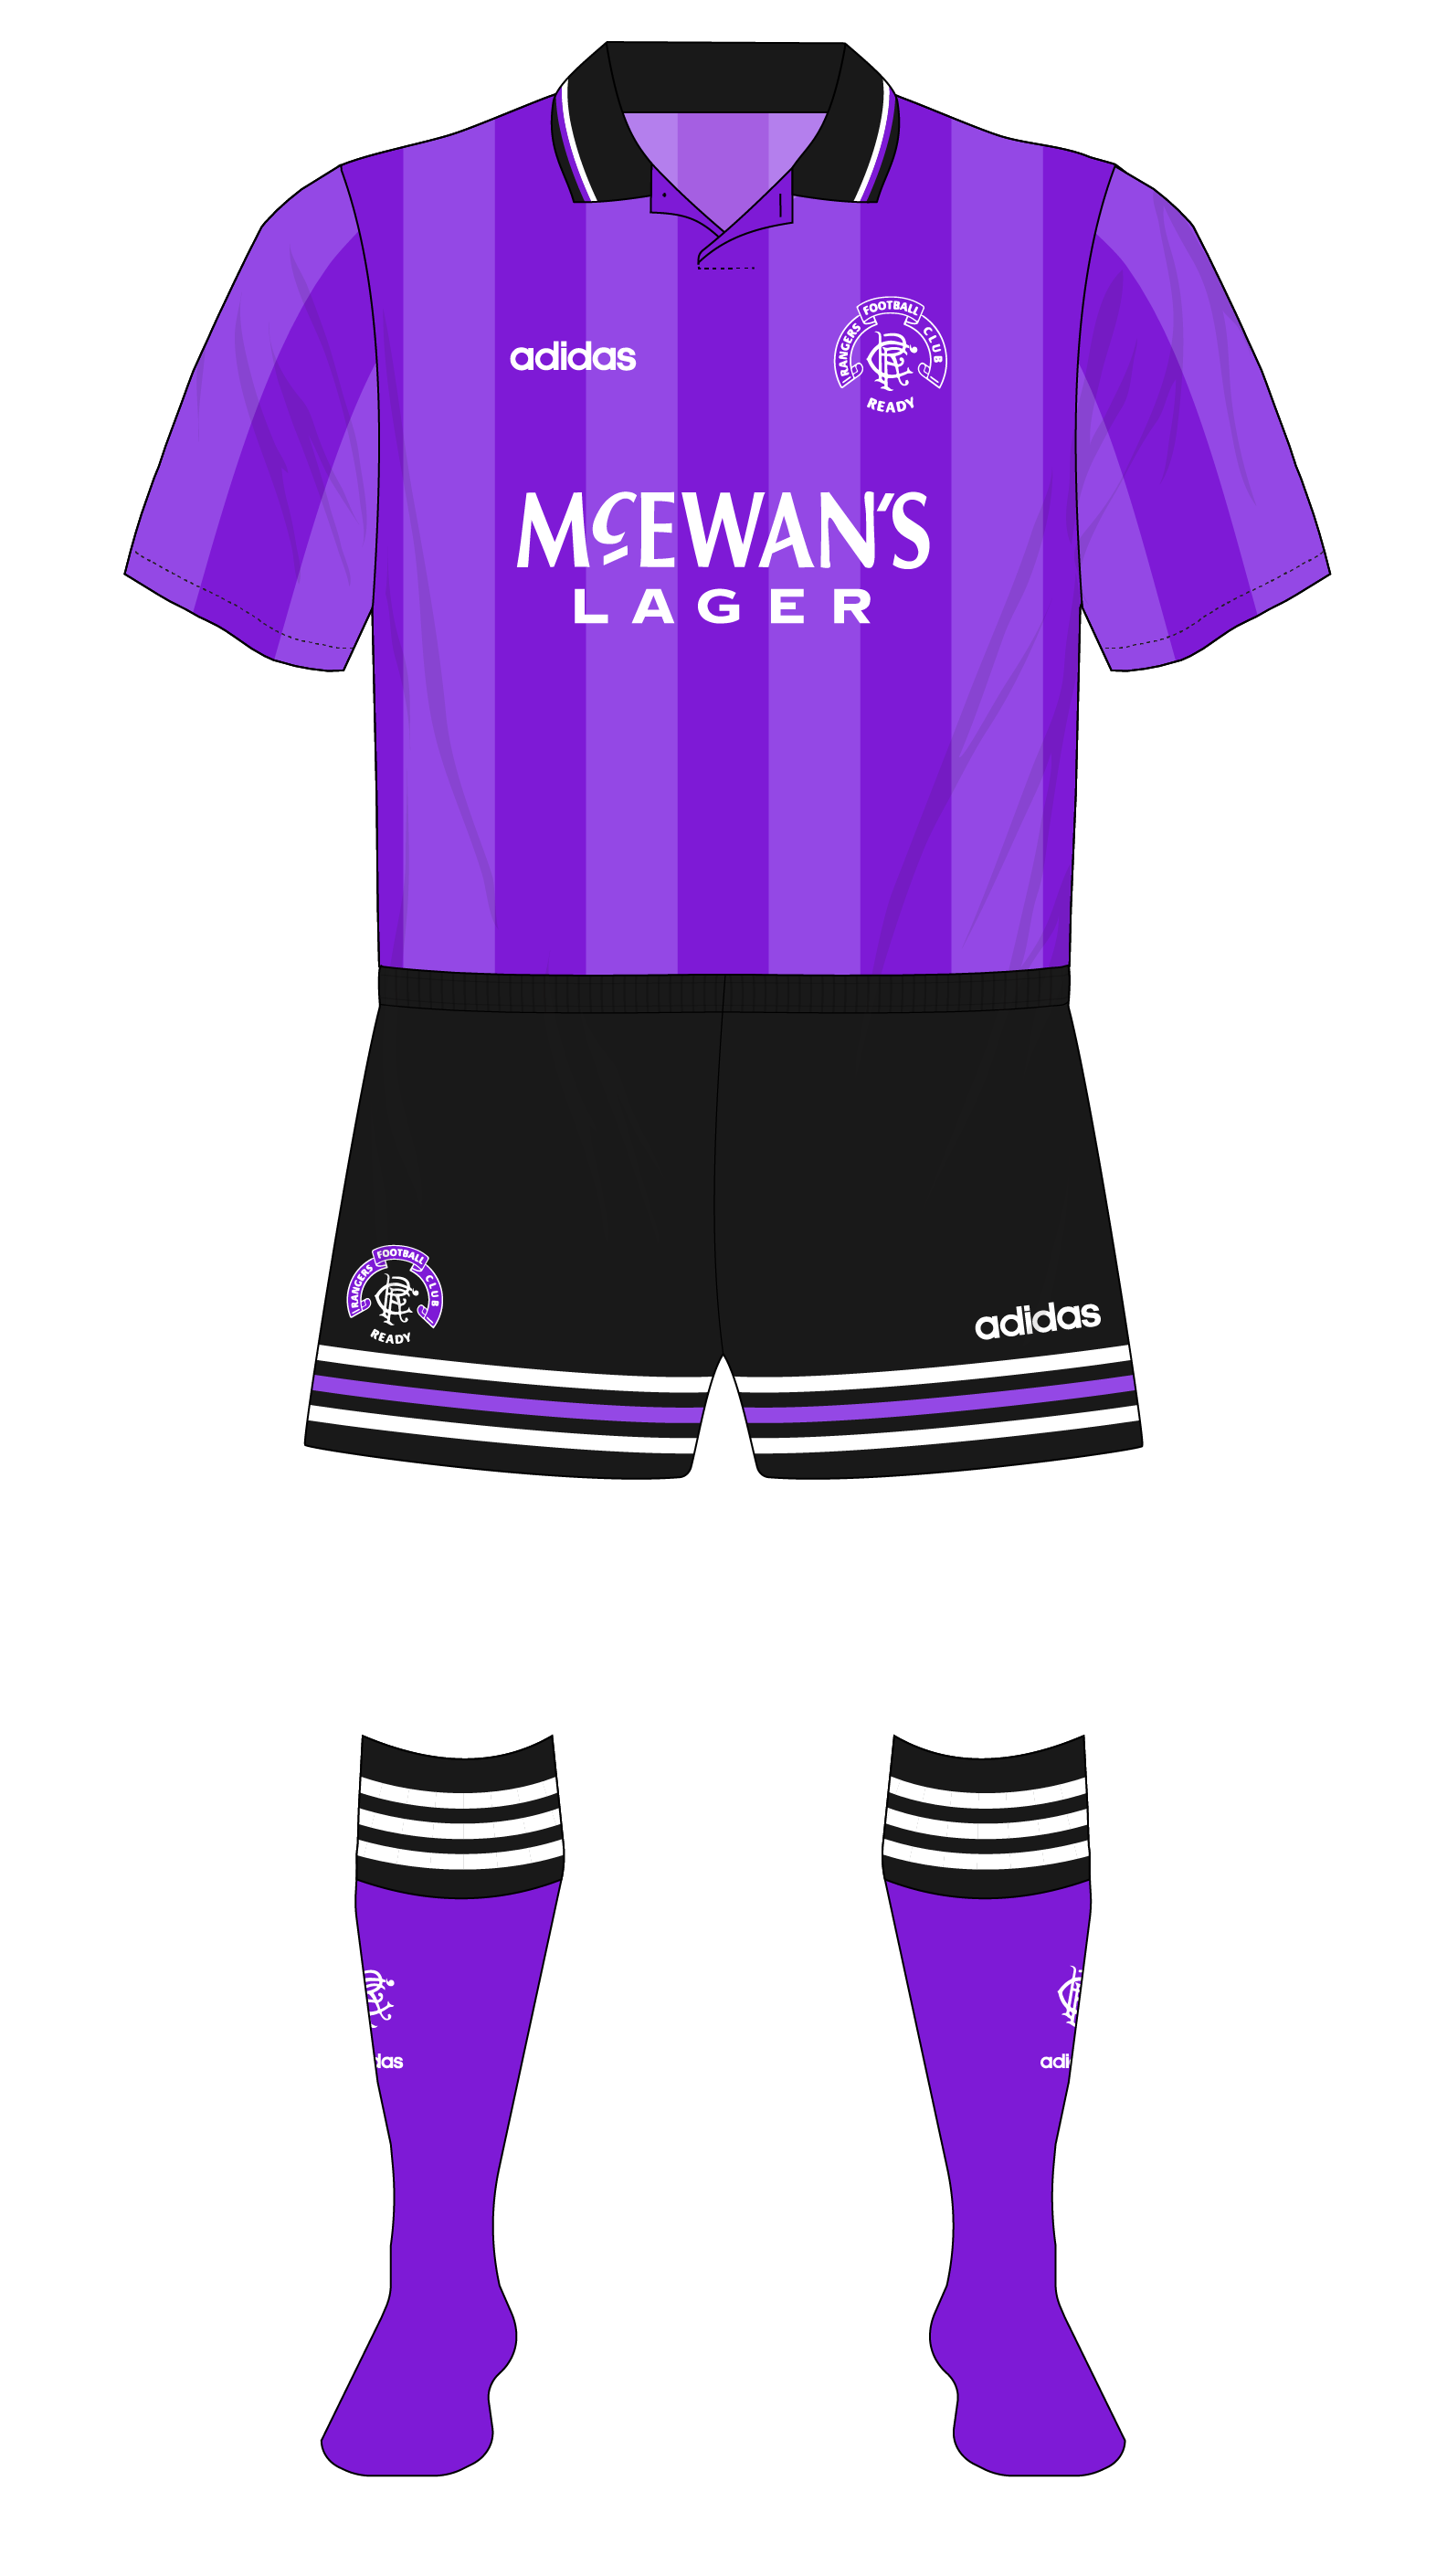 rangers purple shirt